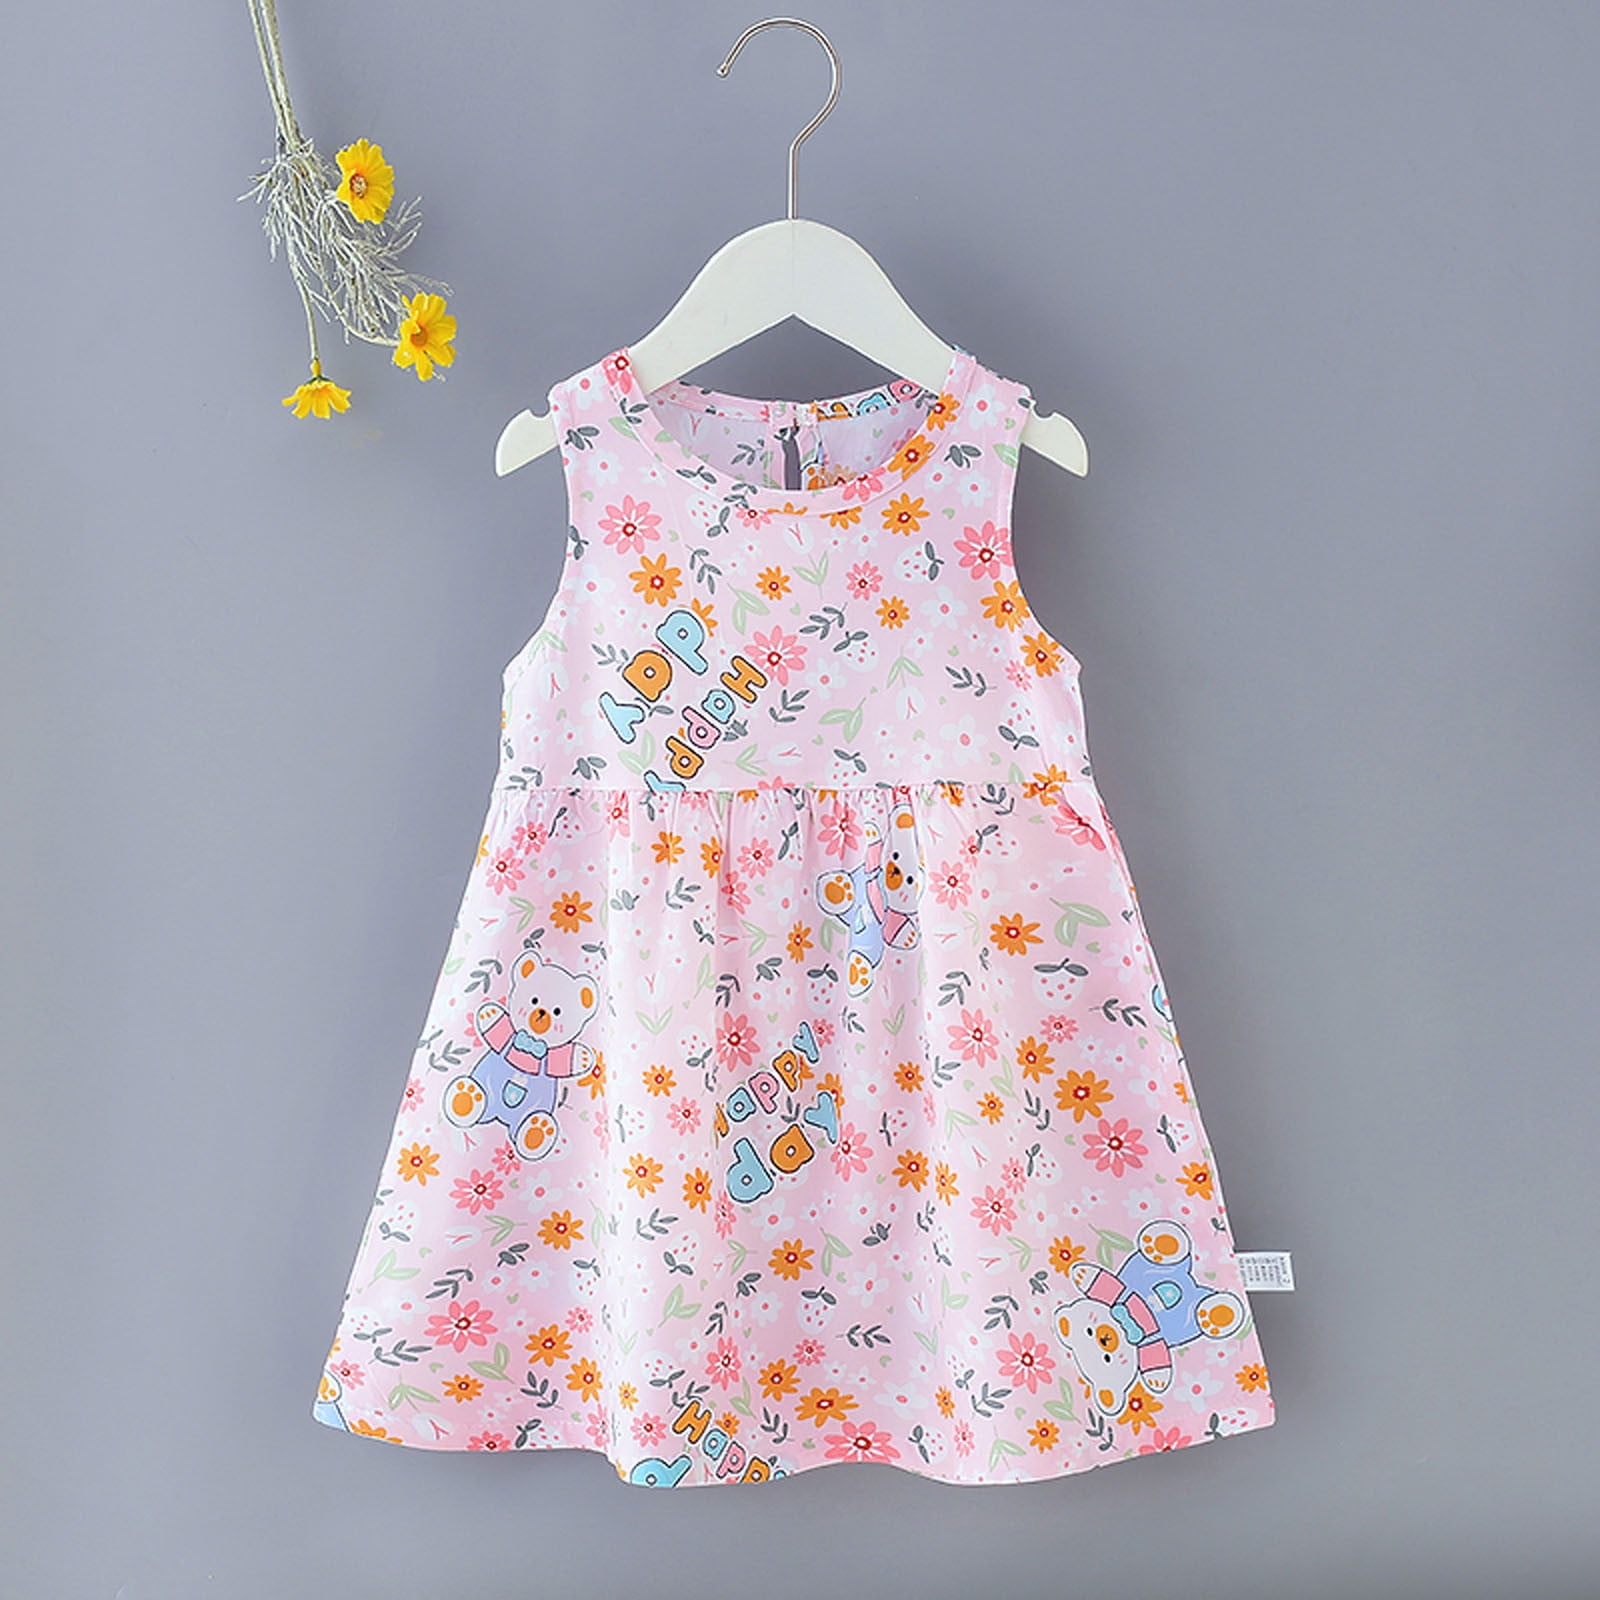 Summer Savings Clearance! Edvintorg Girls'Dresses Summer Toddler Baby ...